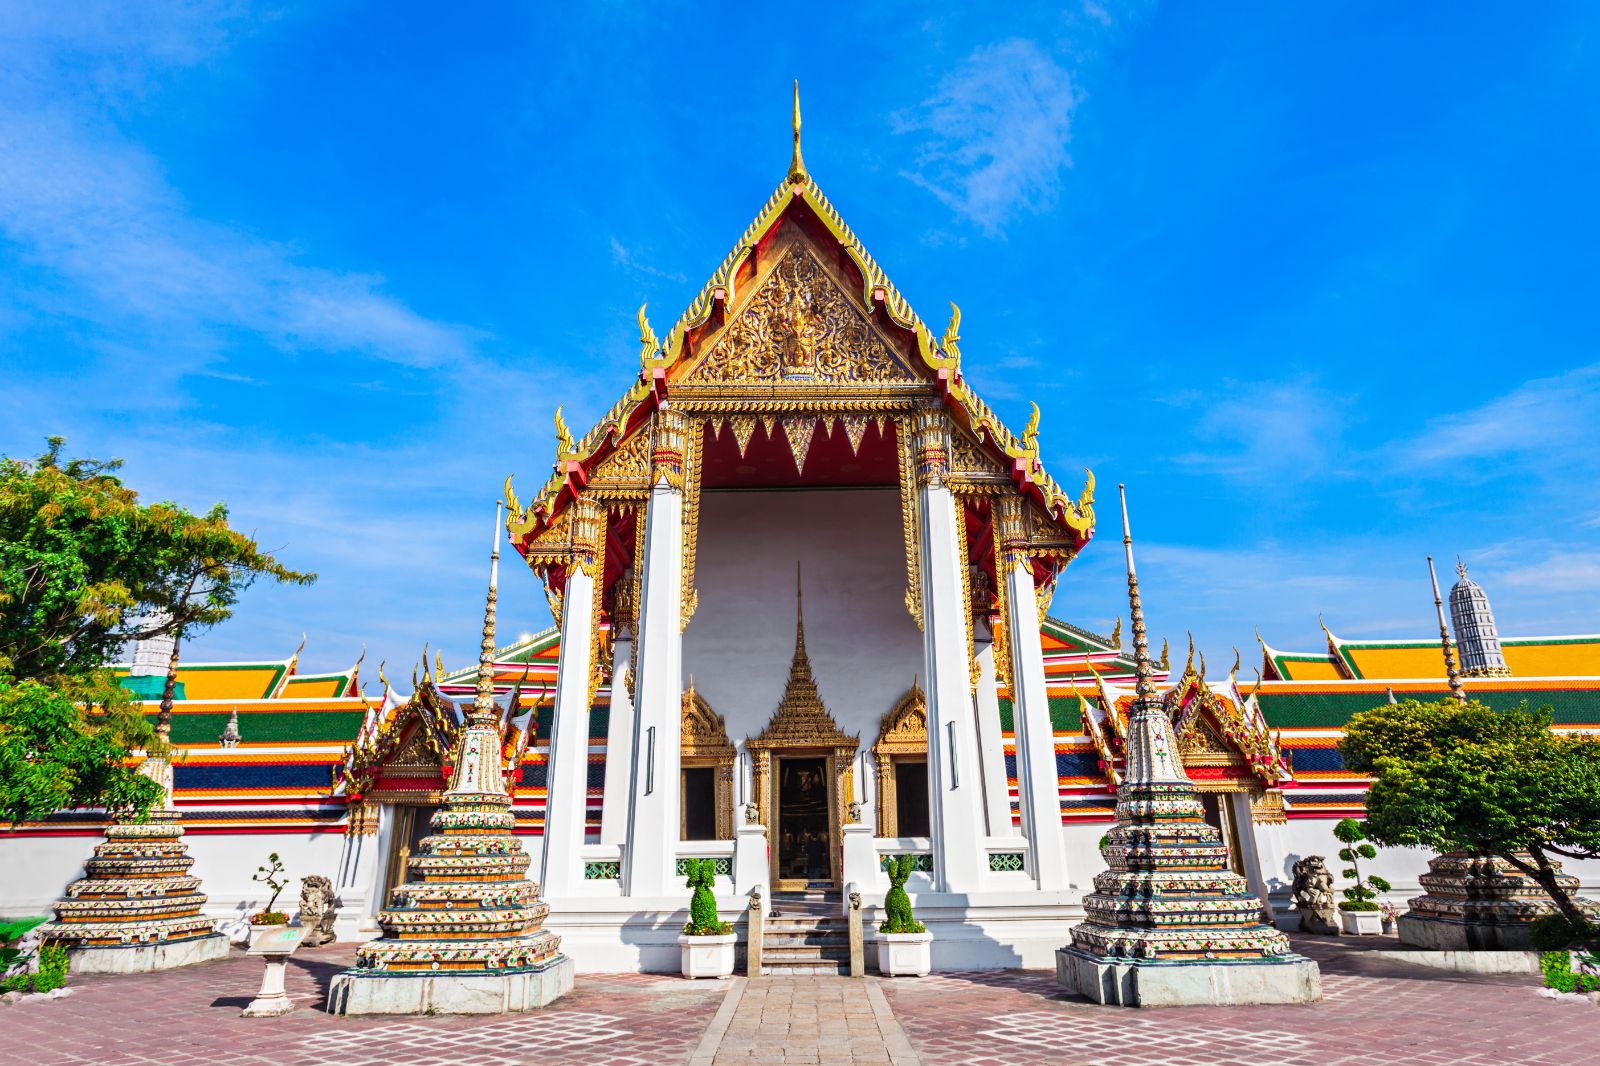 Wat Pho temple in Bangkok, Thailand